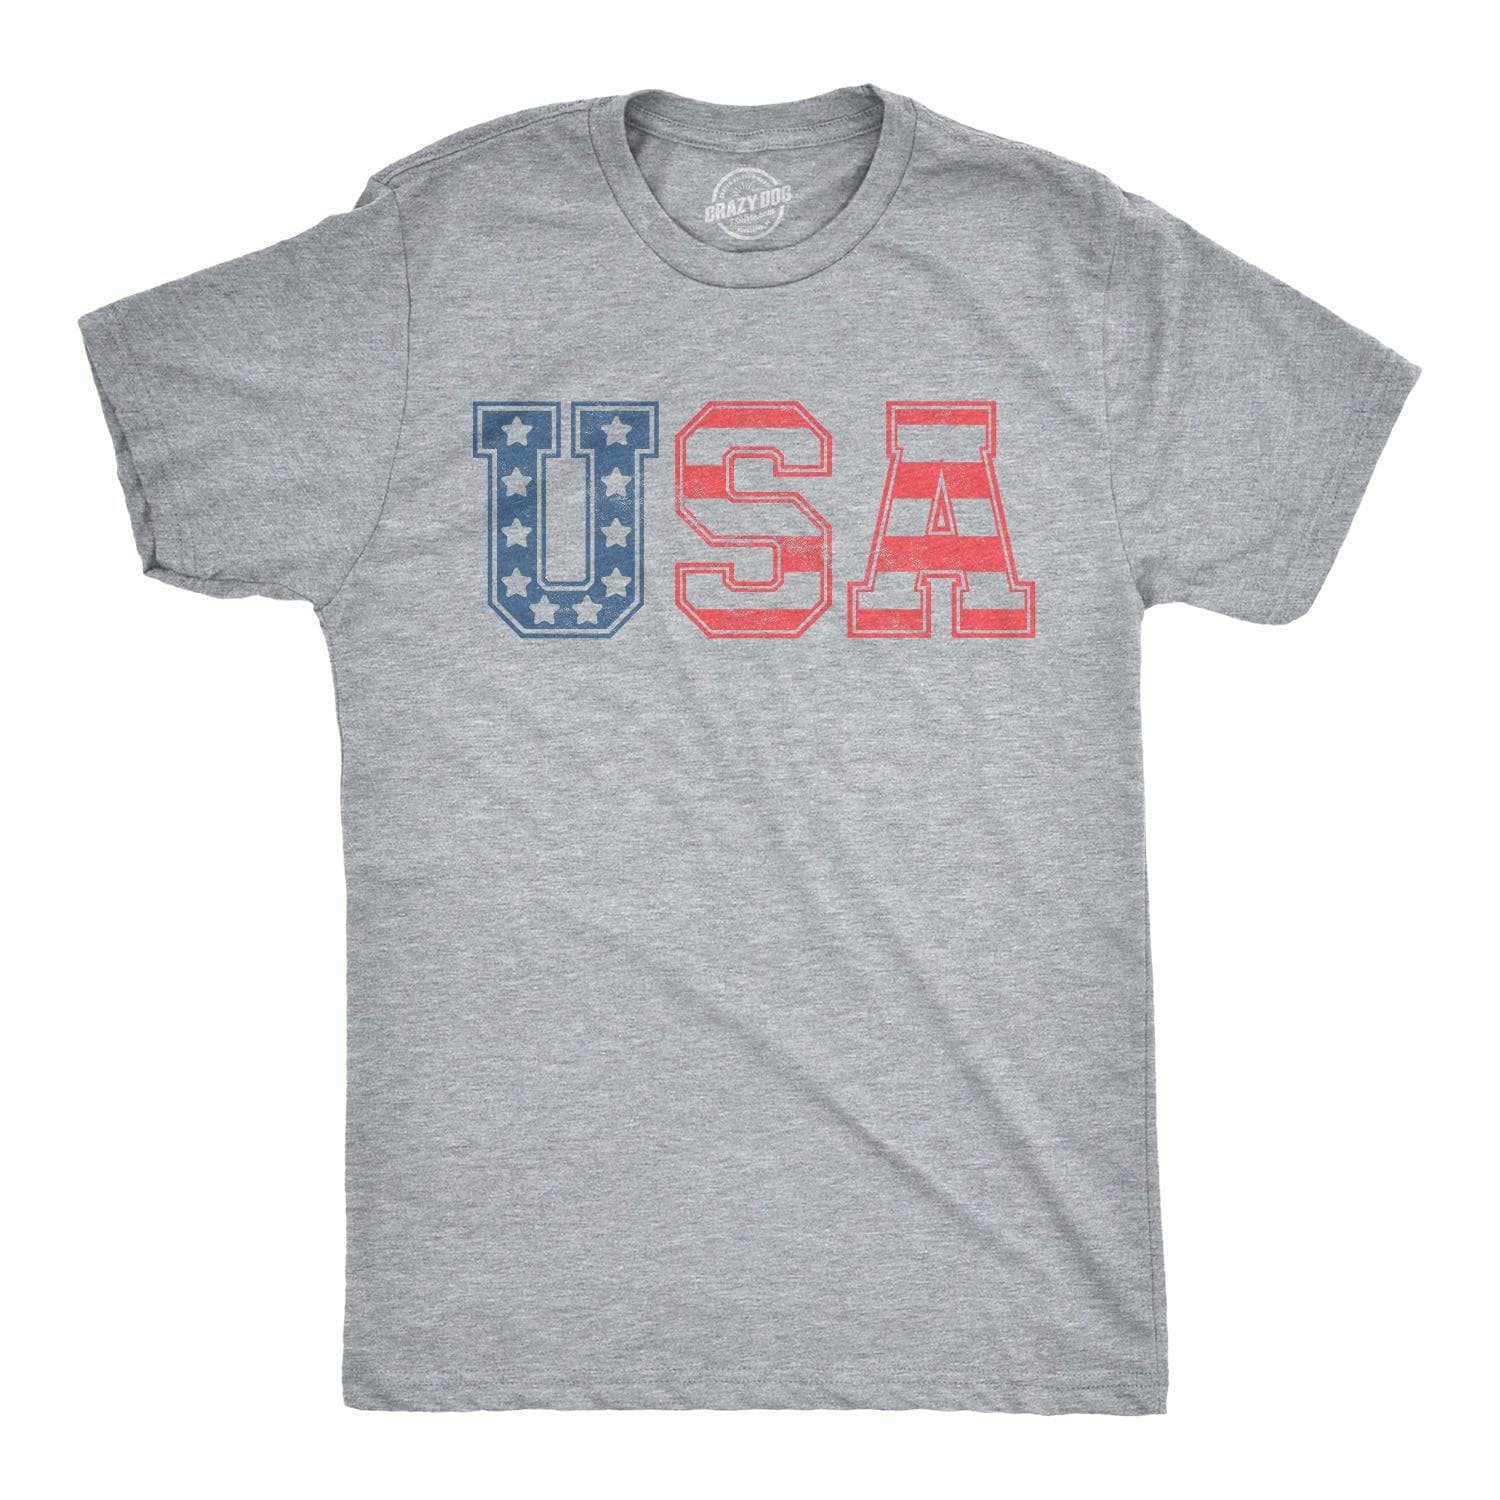 USA Men's Tshirt - Crazy Dog T-Shirts